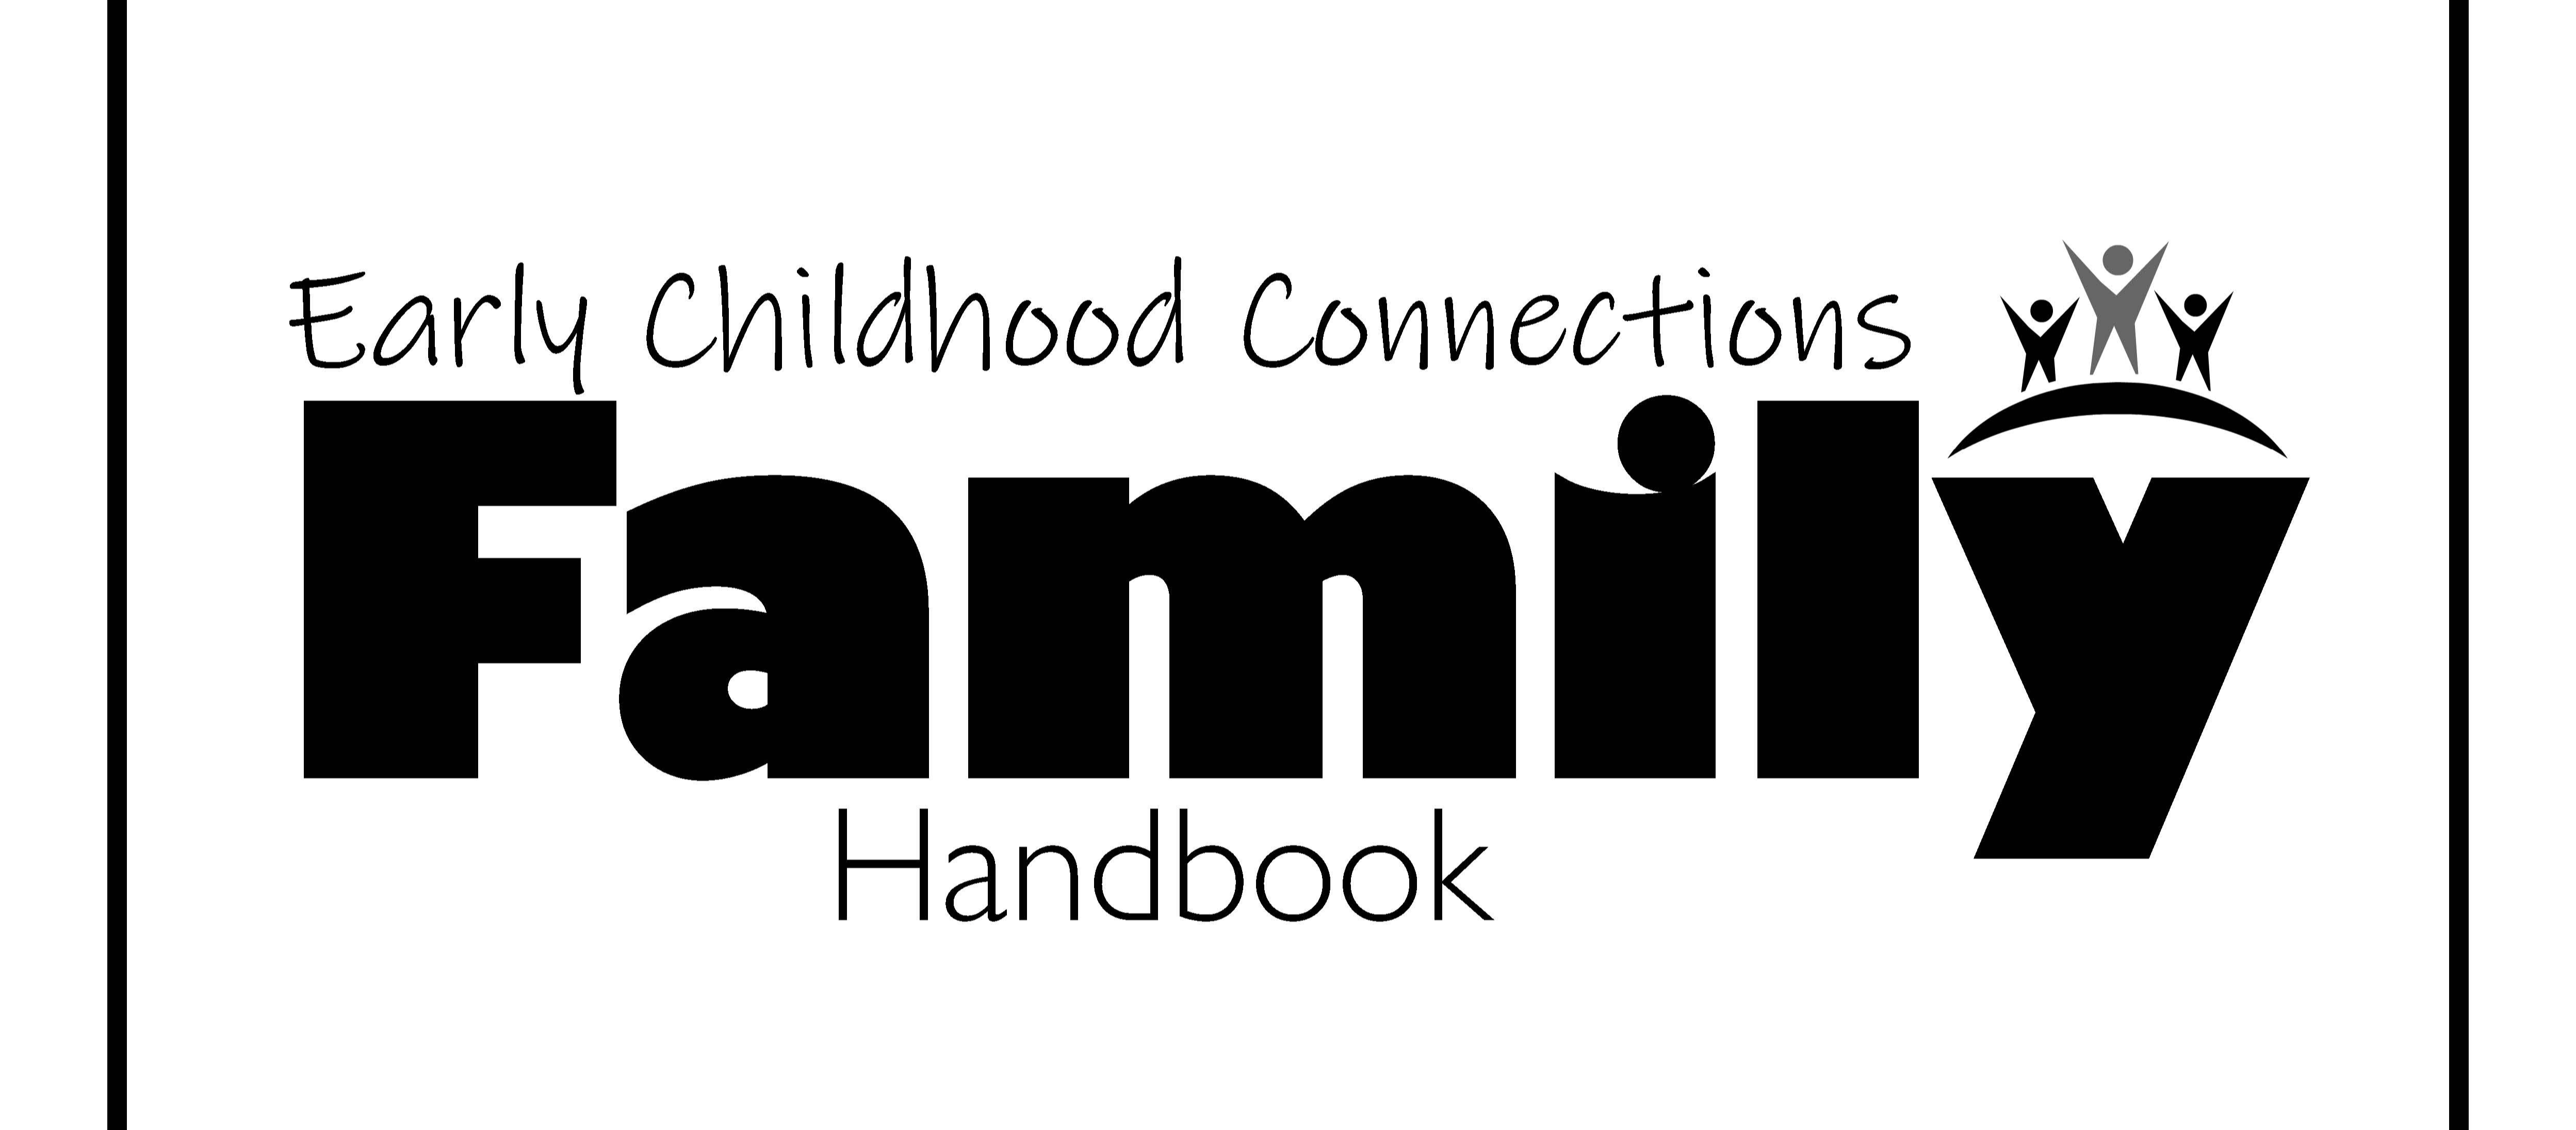 Family Handbook